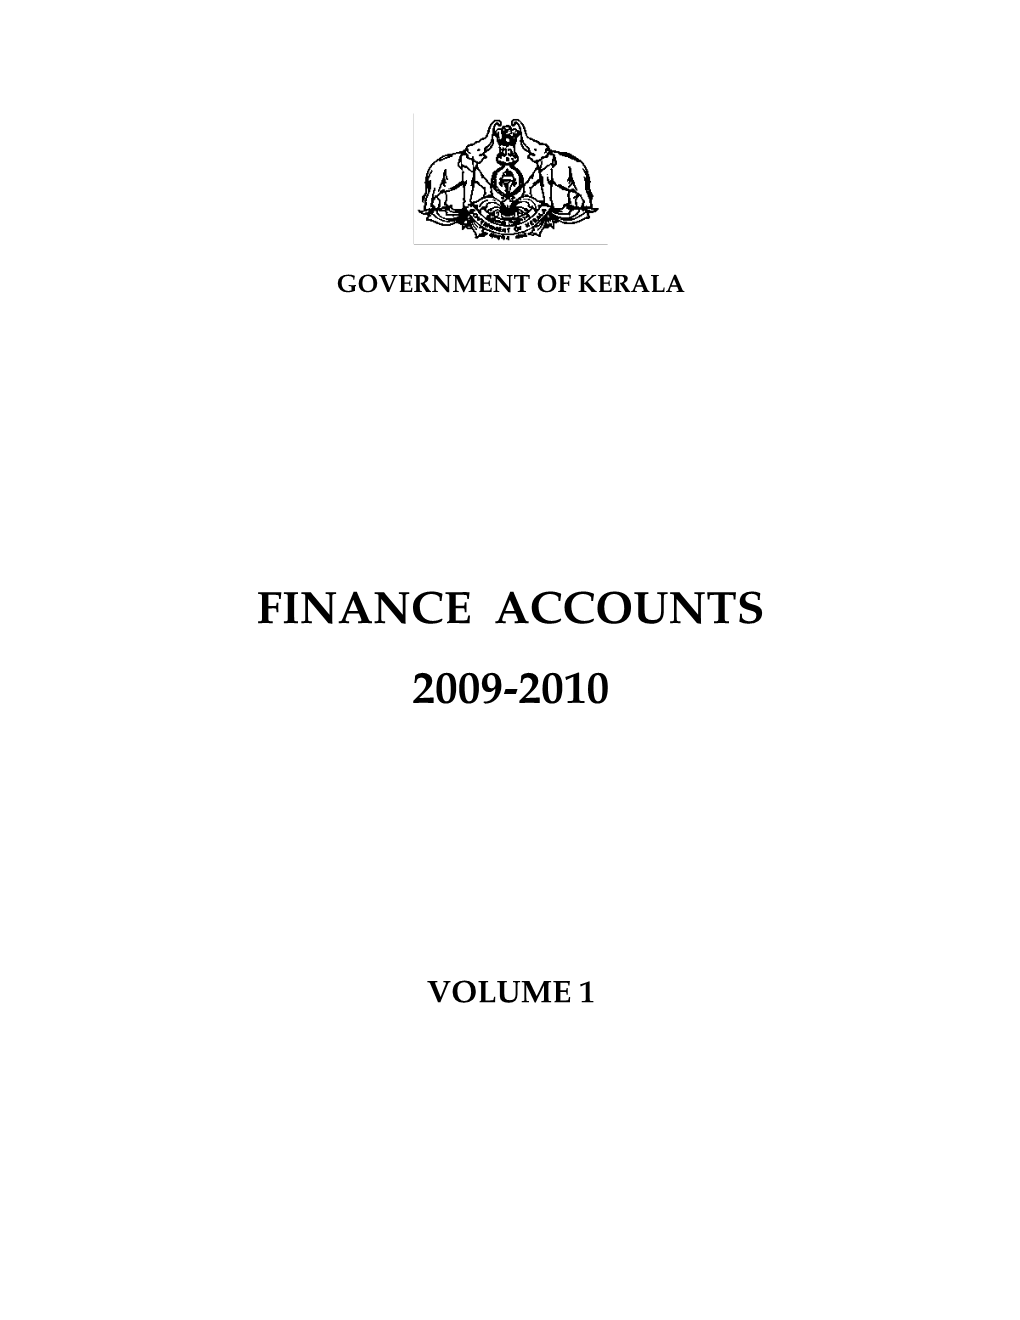 Finance Accounts 2009-2010